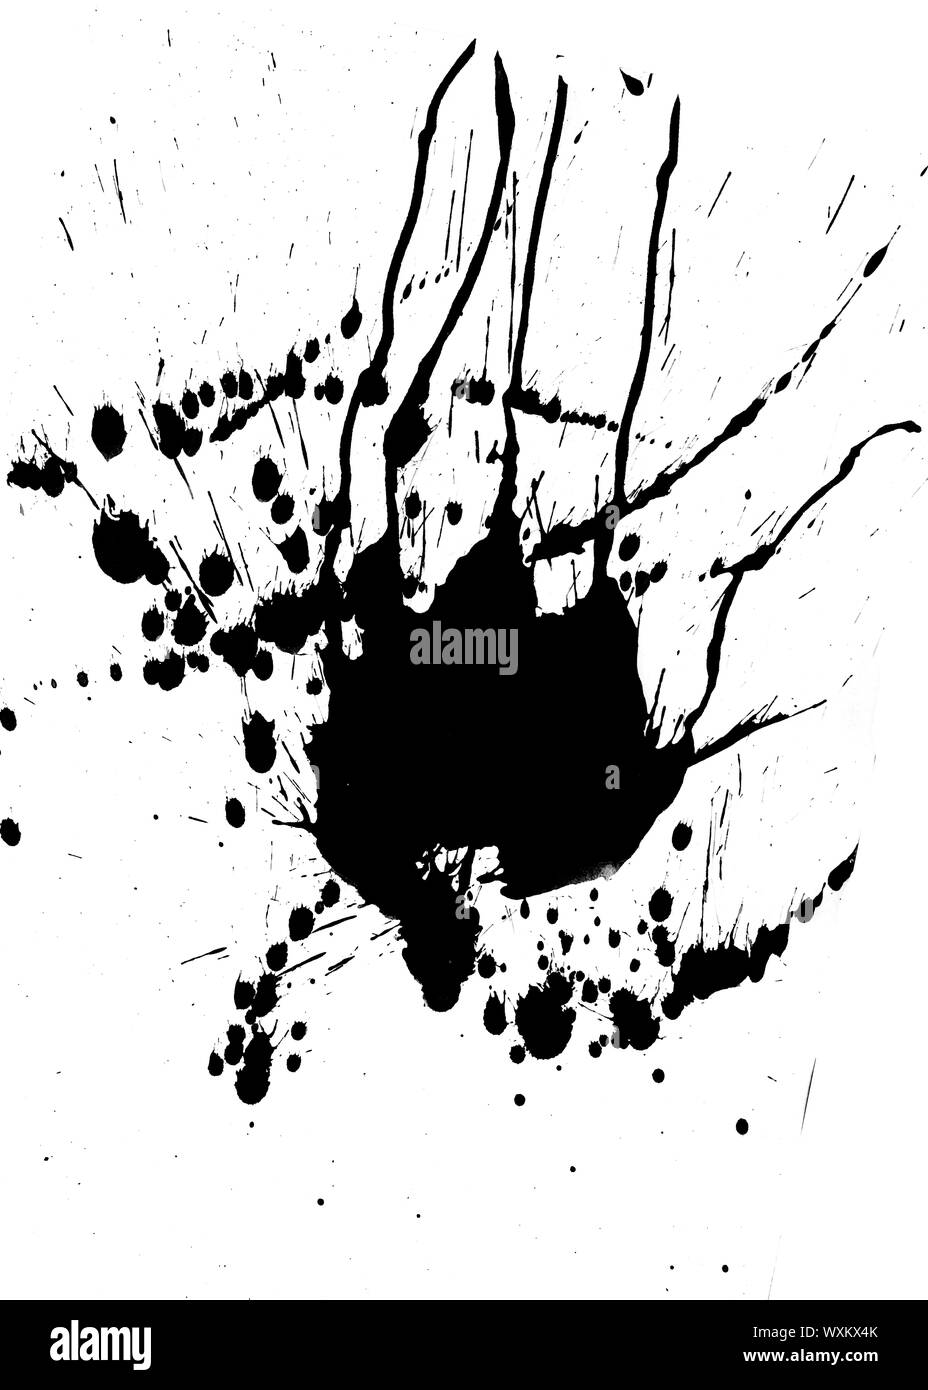 Black paint splash and blobs on white background Stock Photo - Alamy